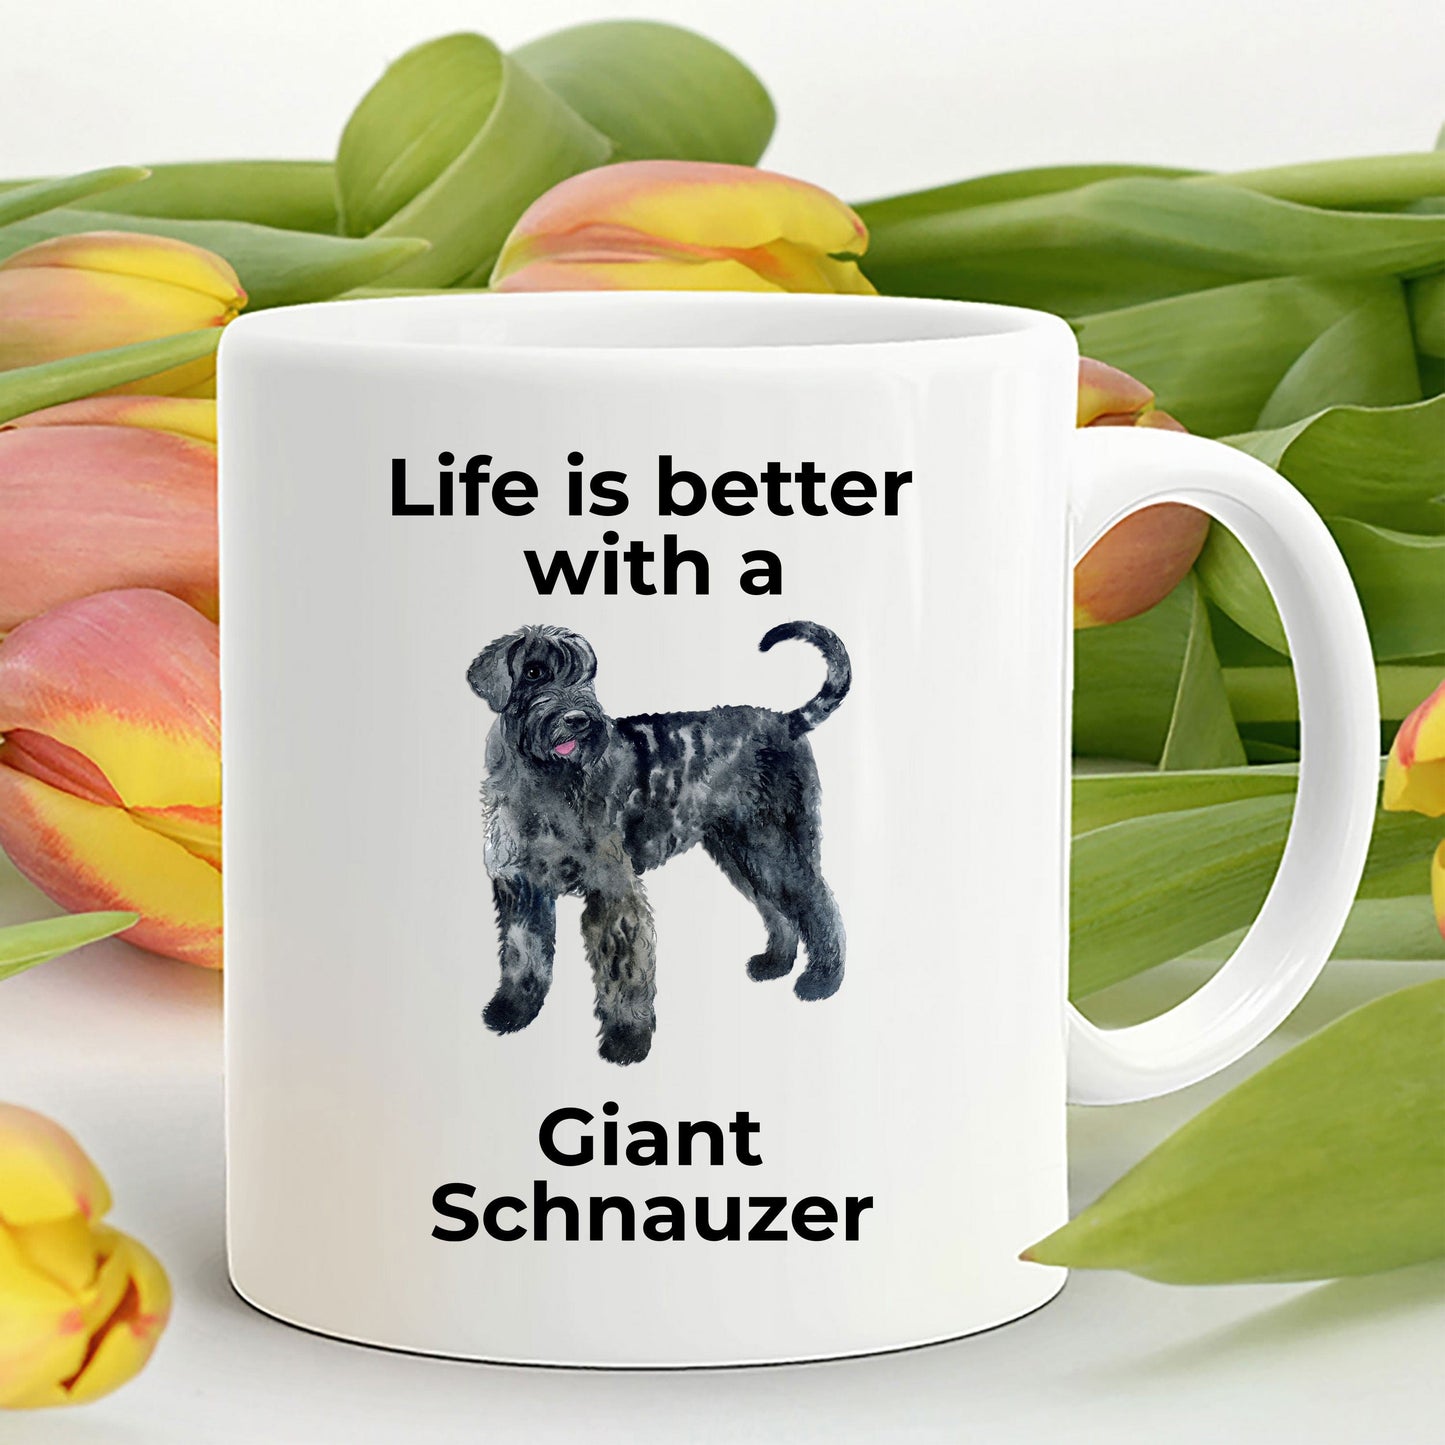 Giant Schnauzer Dog Coffee Mug - Life is Better